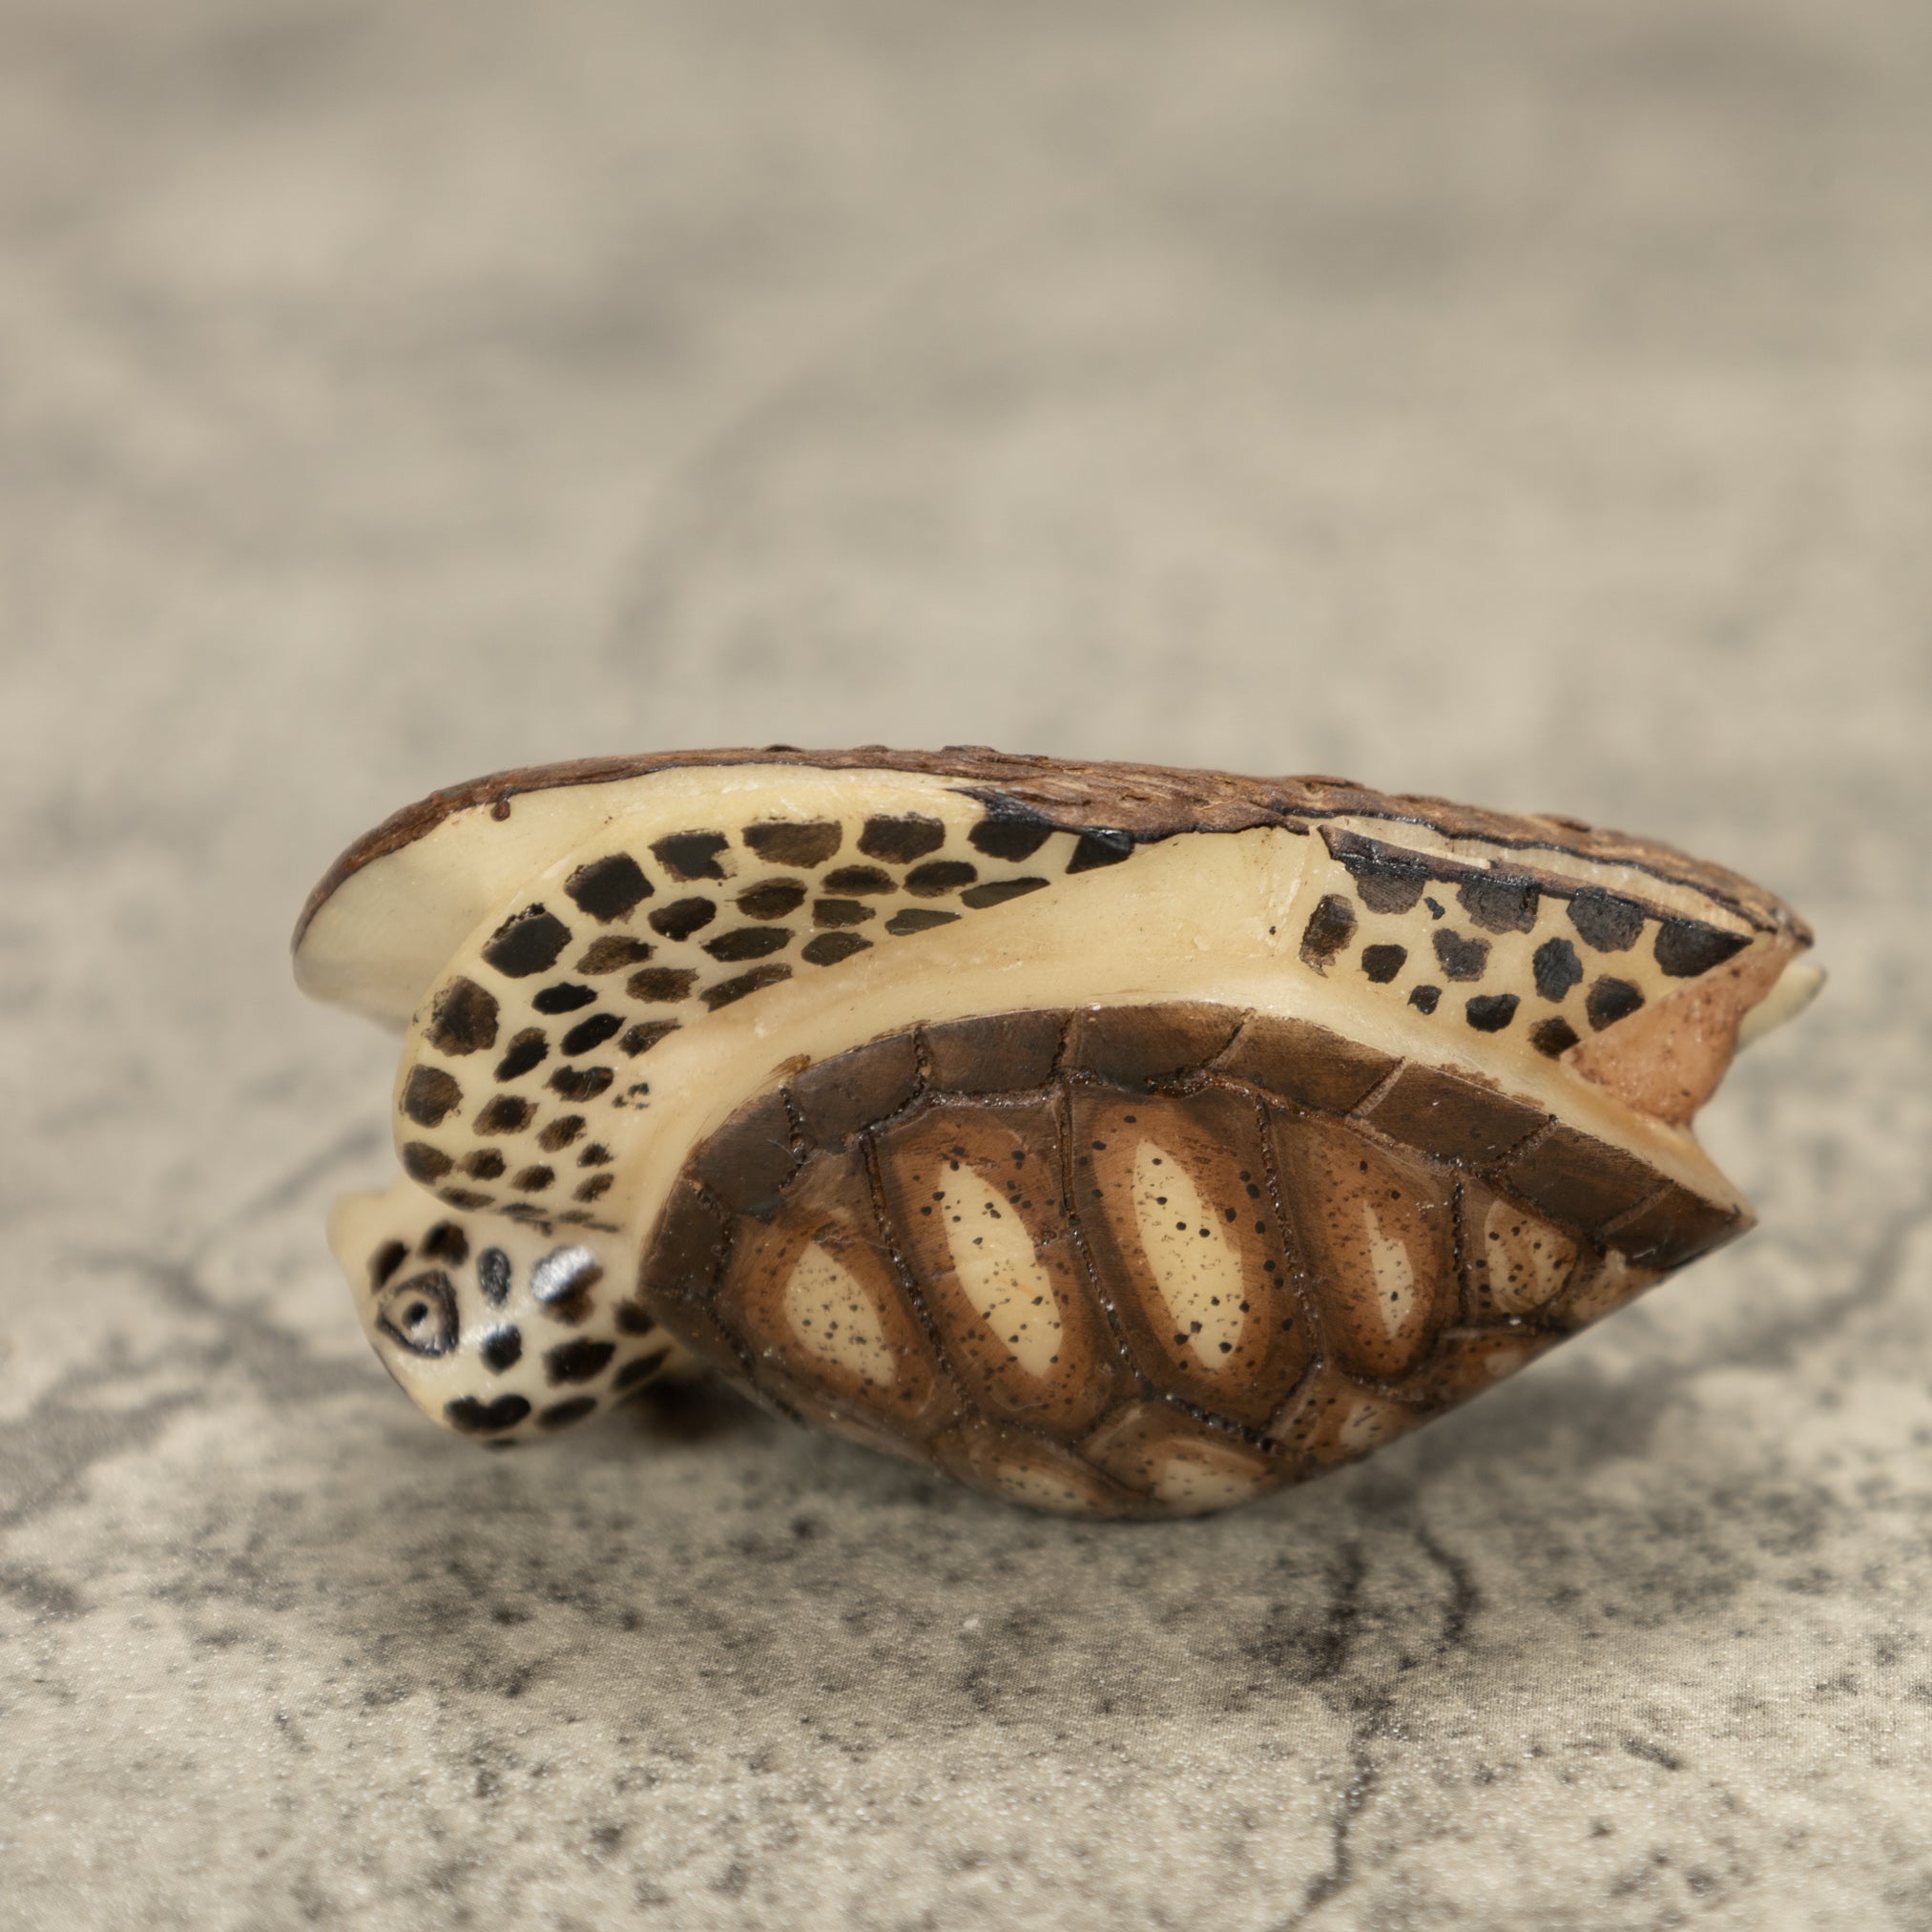 Sea Turtle Tagua Nut Carving